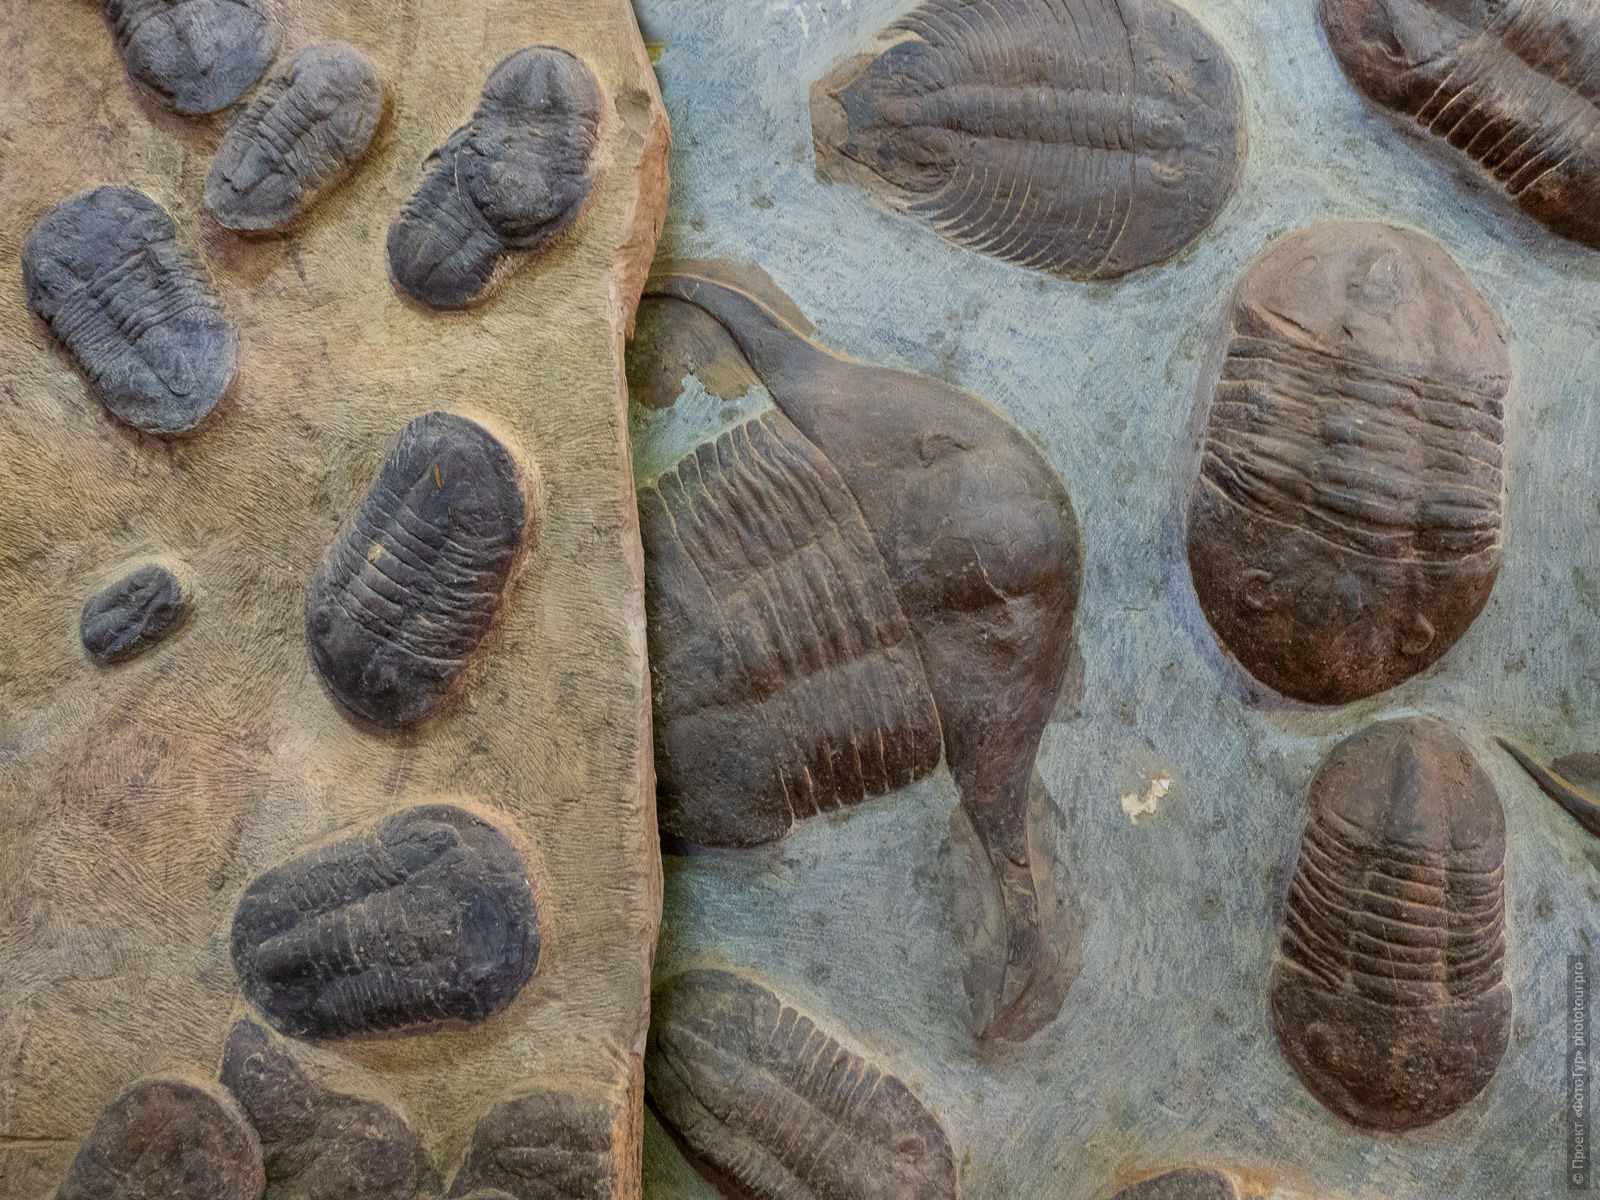 Plate with trilobites, Merzouga. Adventure photo tour: medina, cascades, sands and ports of Morocco, April 4 - 17, 2020.